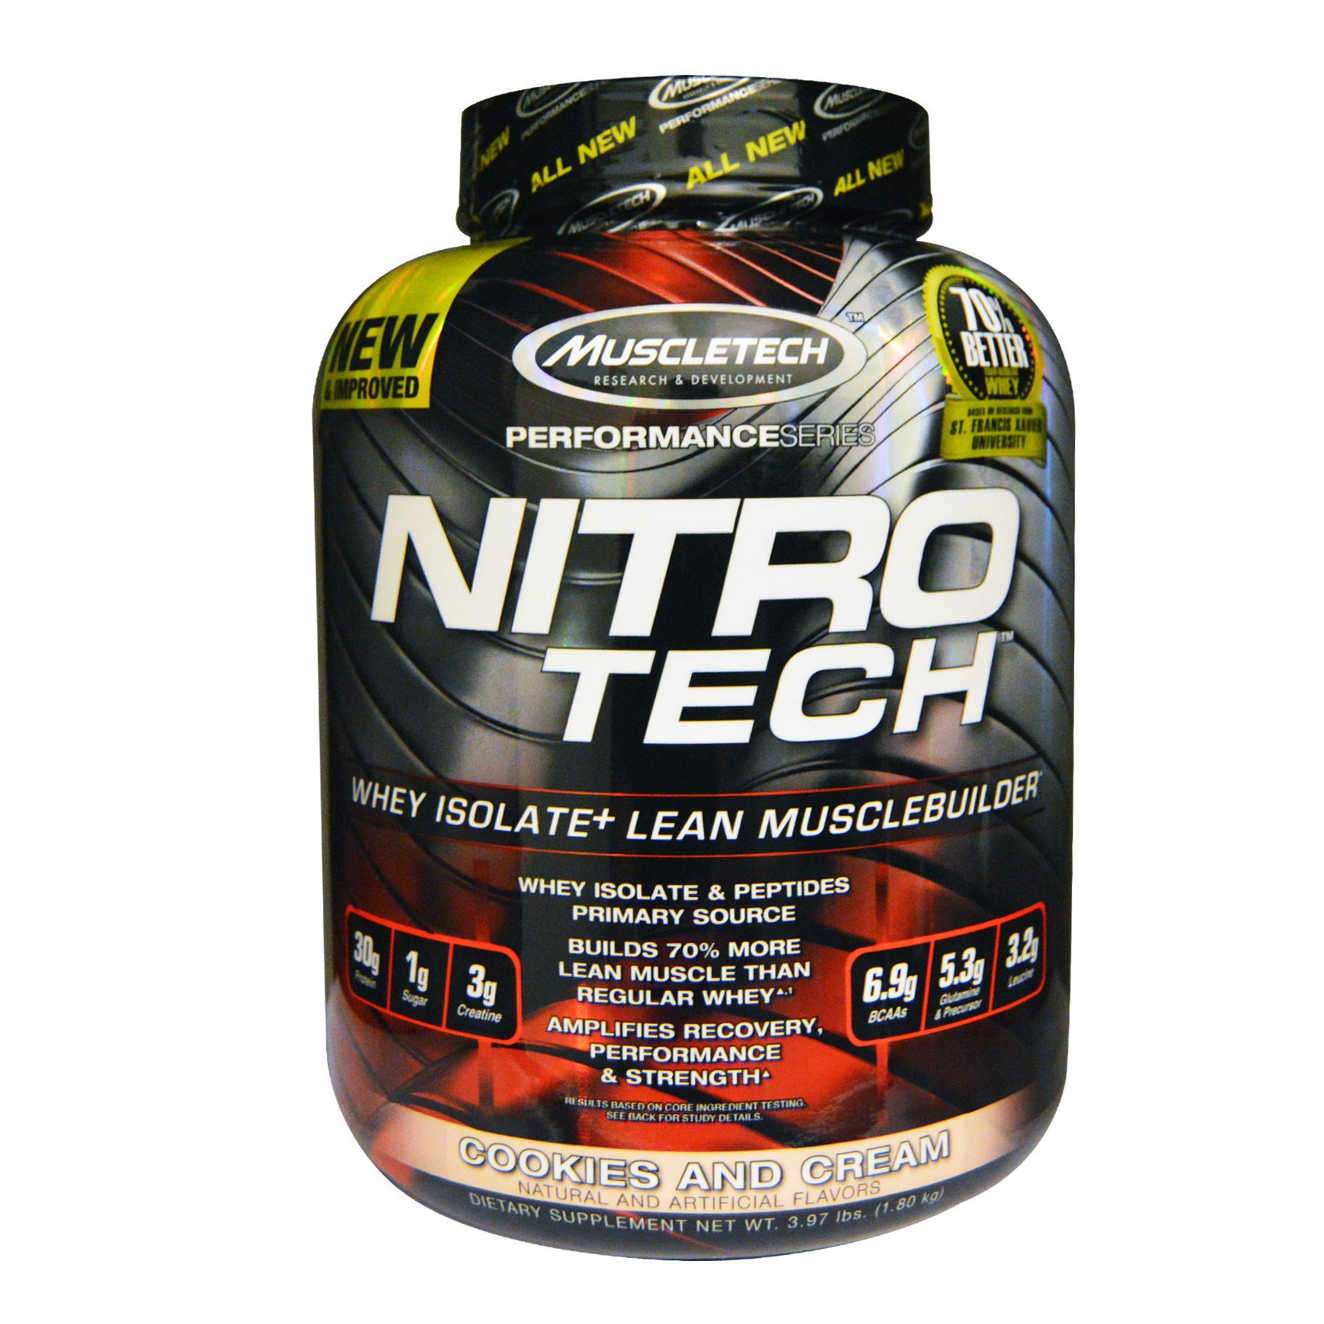 Nitro Tech Whey Isolate - Muscletech